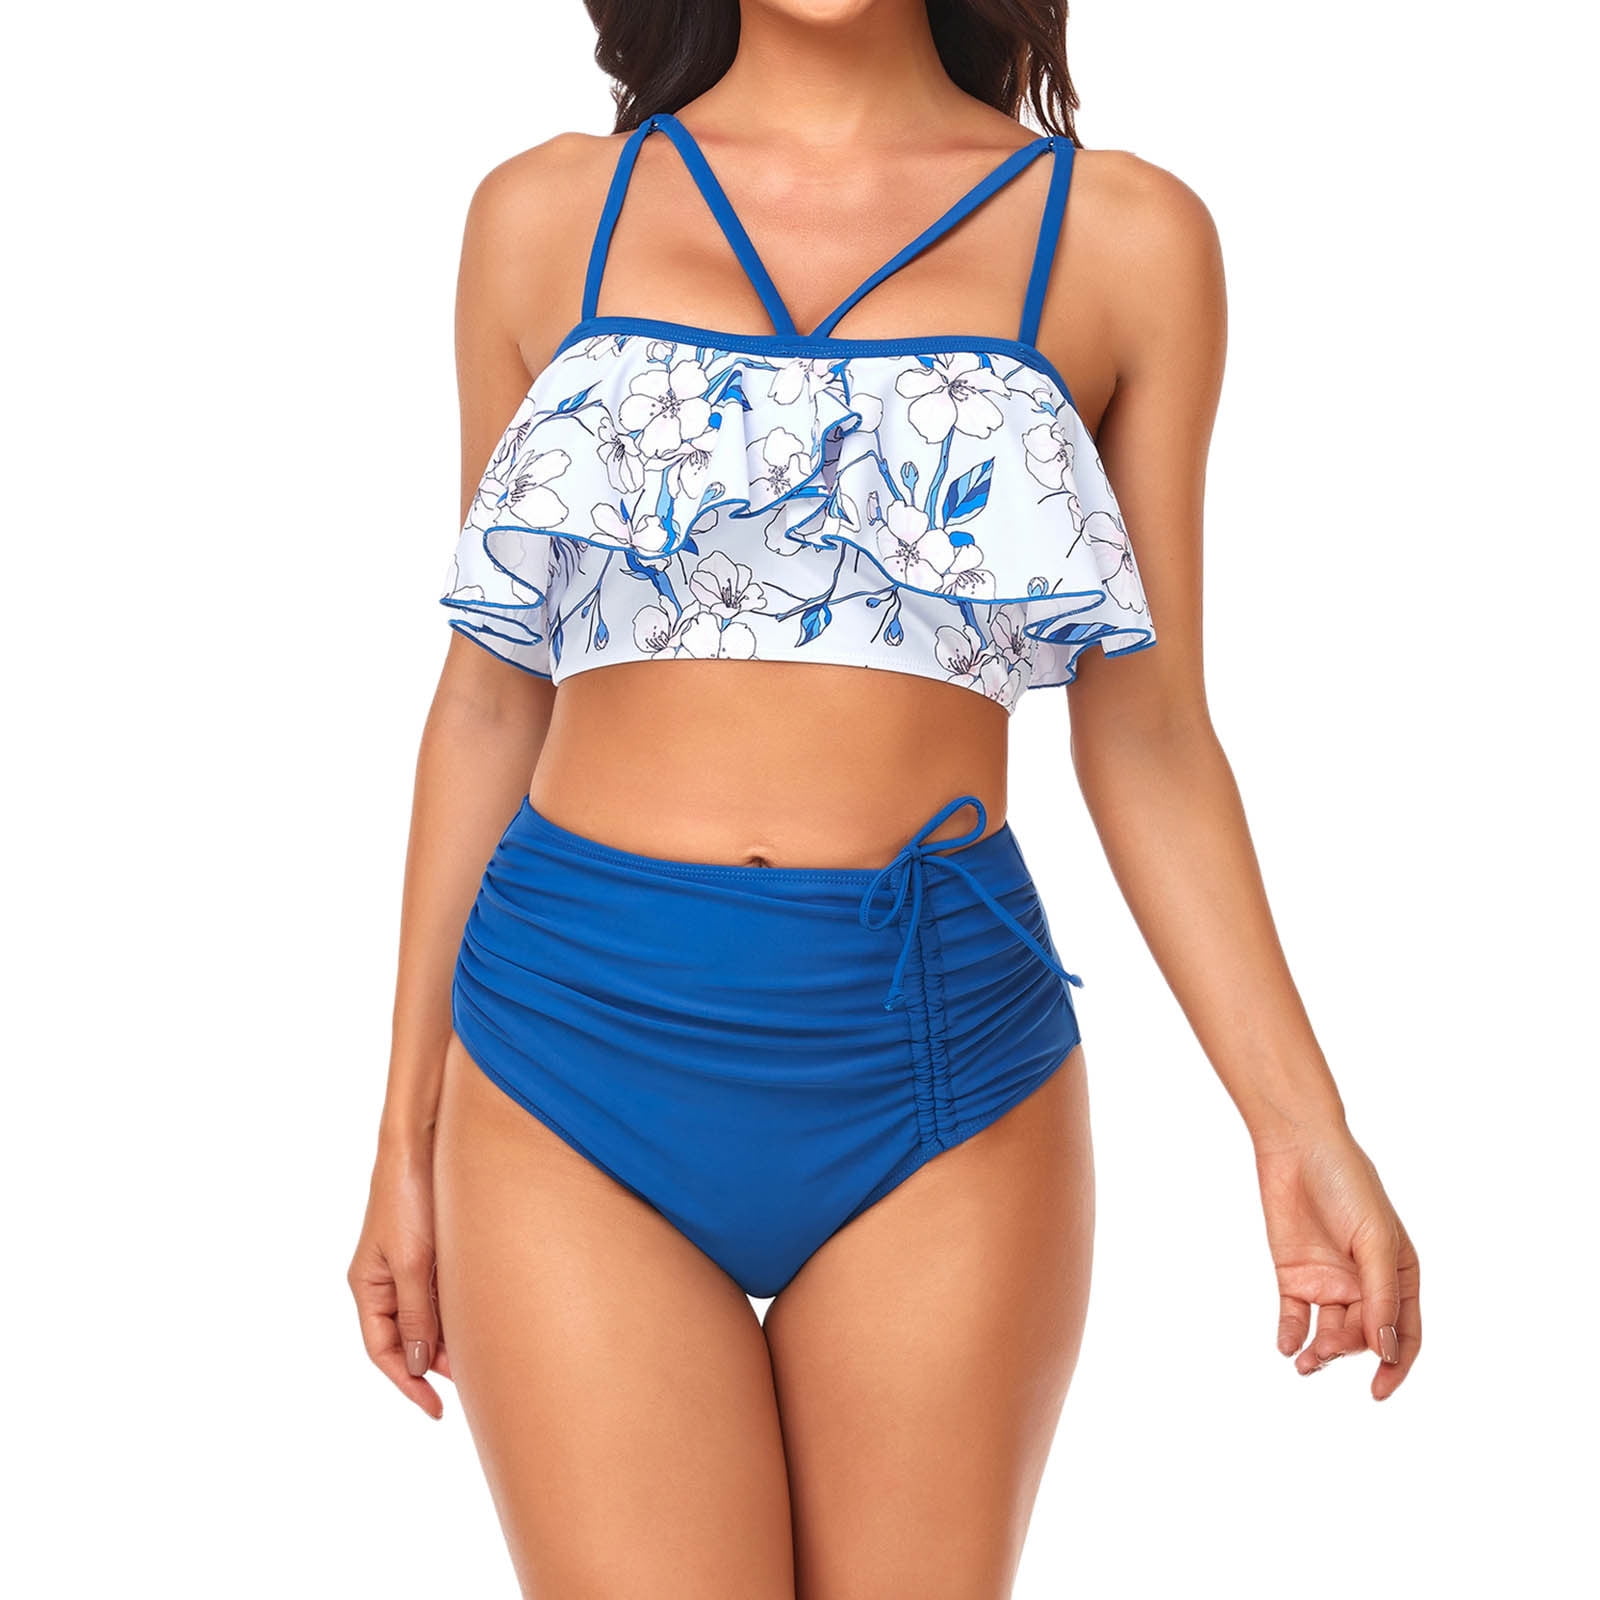 VSSSJ Bikini Bathing Suits for Women High Waisted Swimwear Padded Push Up  Striped Printed Beachwear Strappy Two Piece Swimsuits Blue XXL 